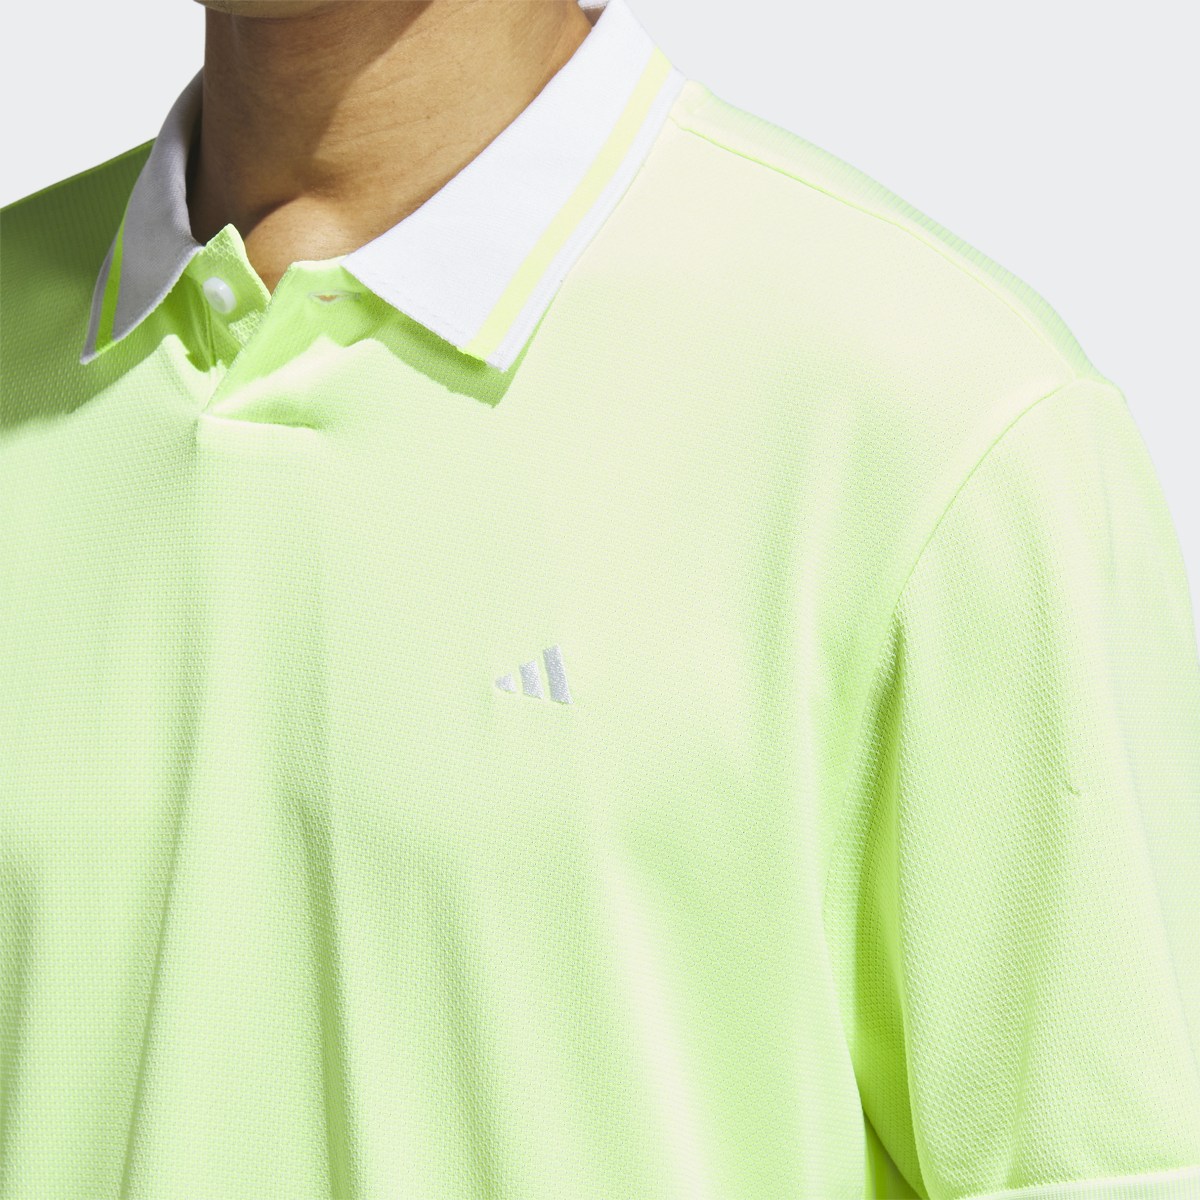 Adidas Ultimate365 Tour PRIMEKNIT Golf Polo Shirt. 9